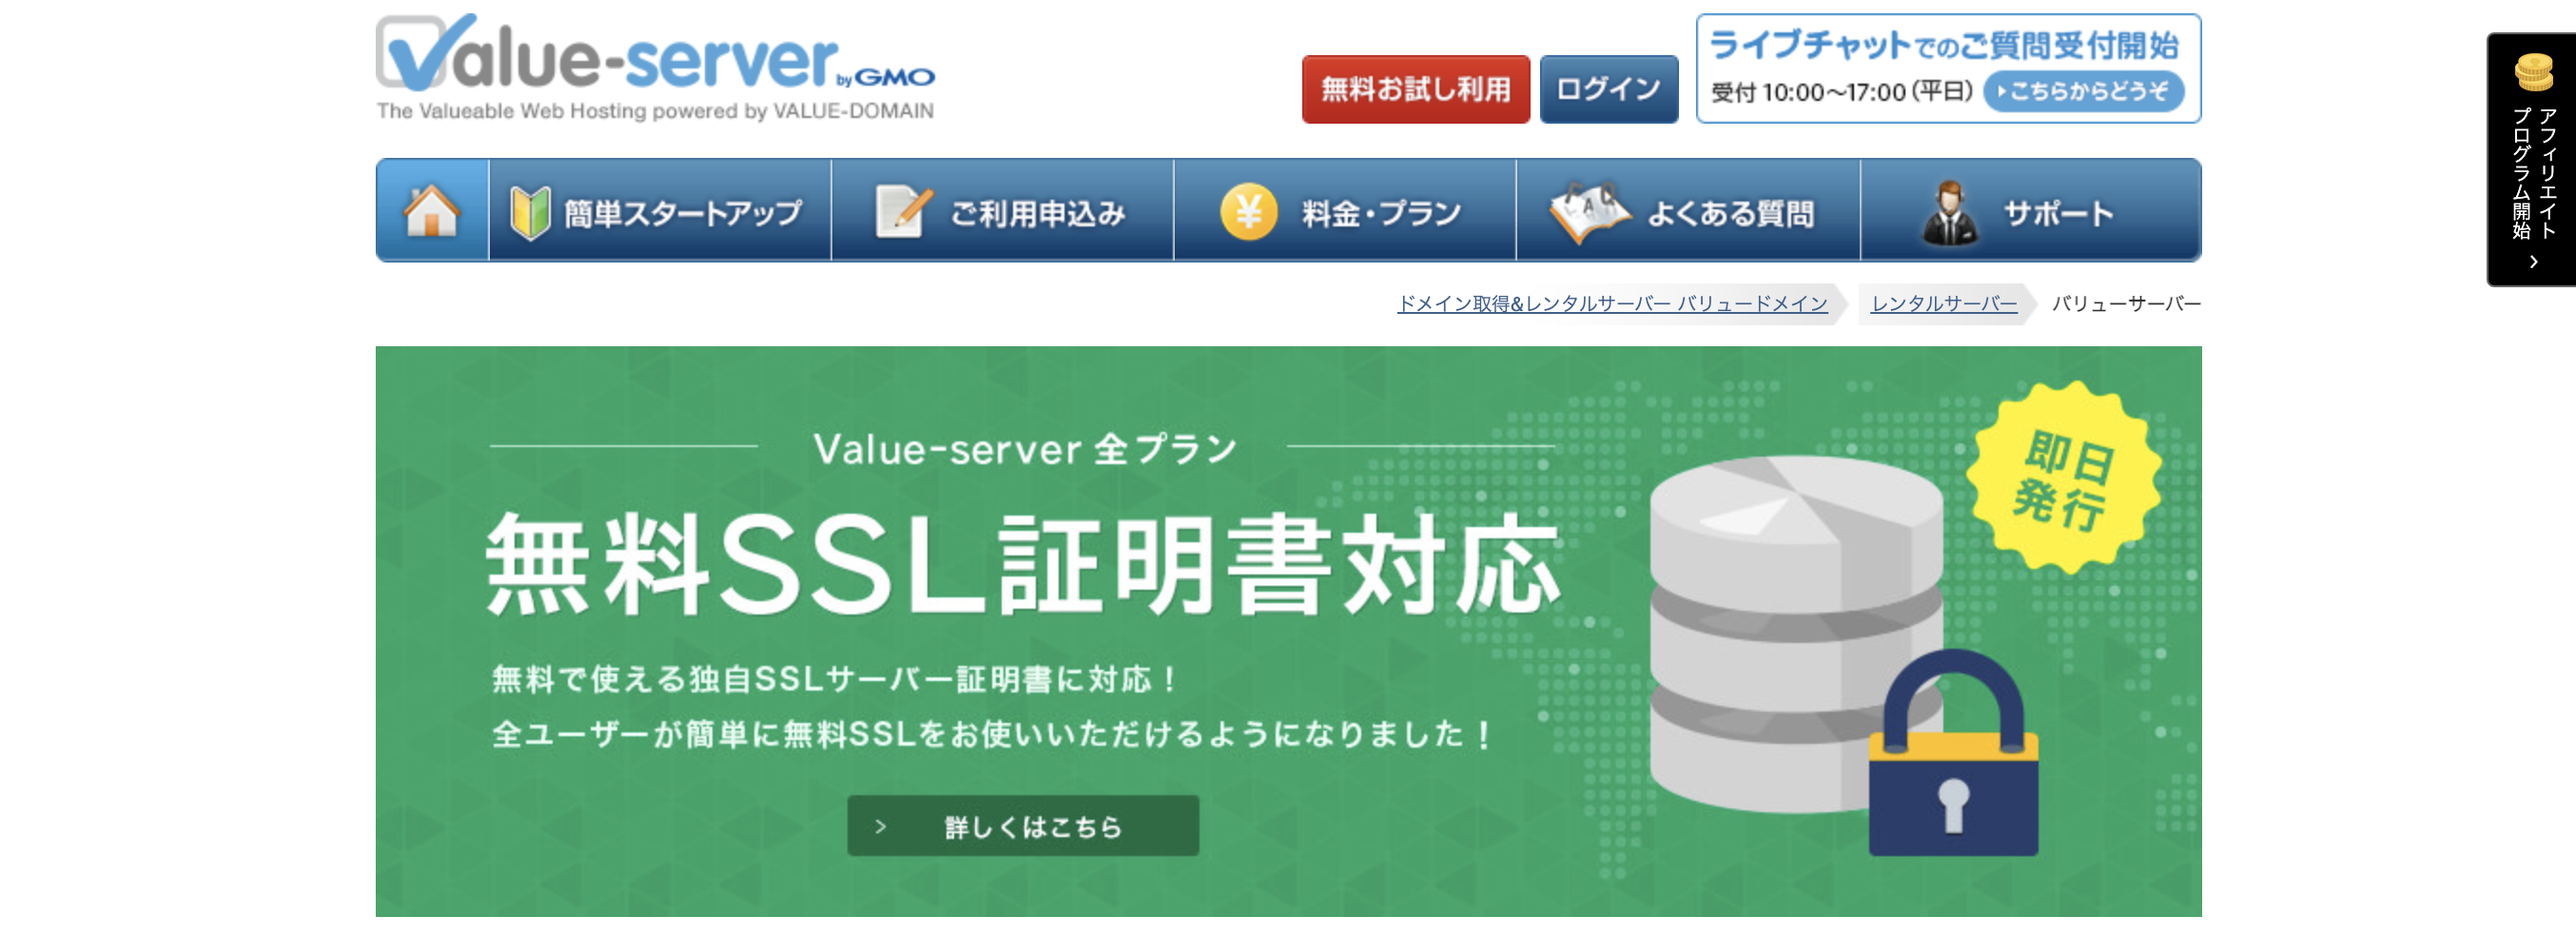 Value-server